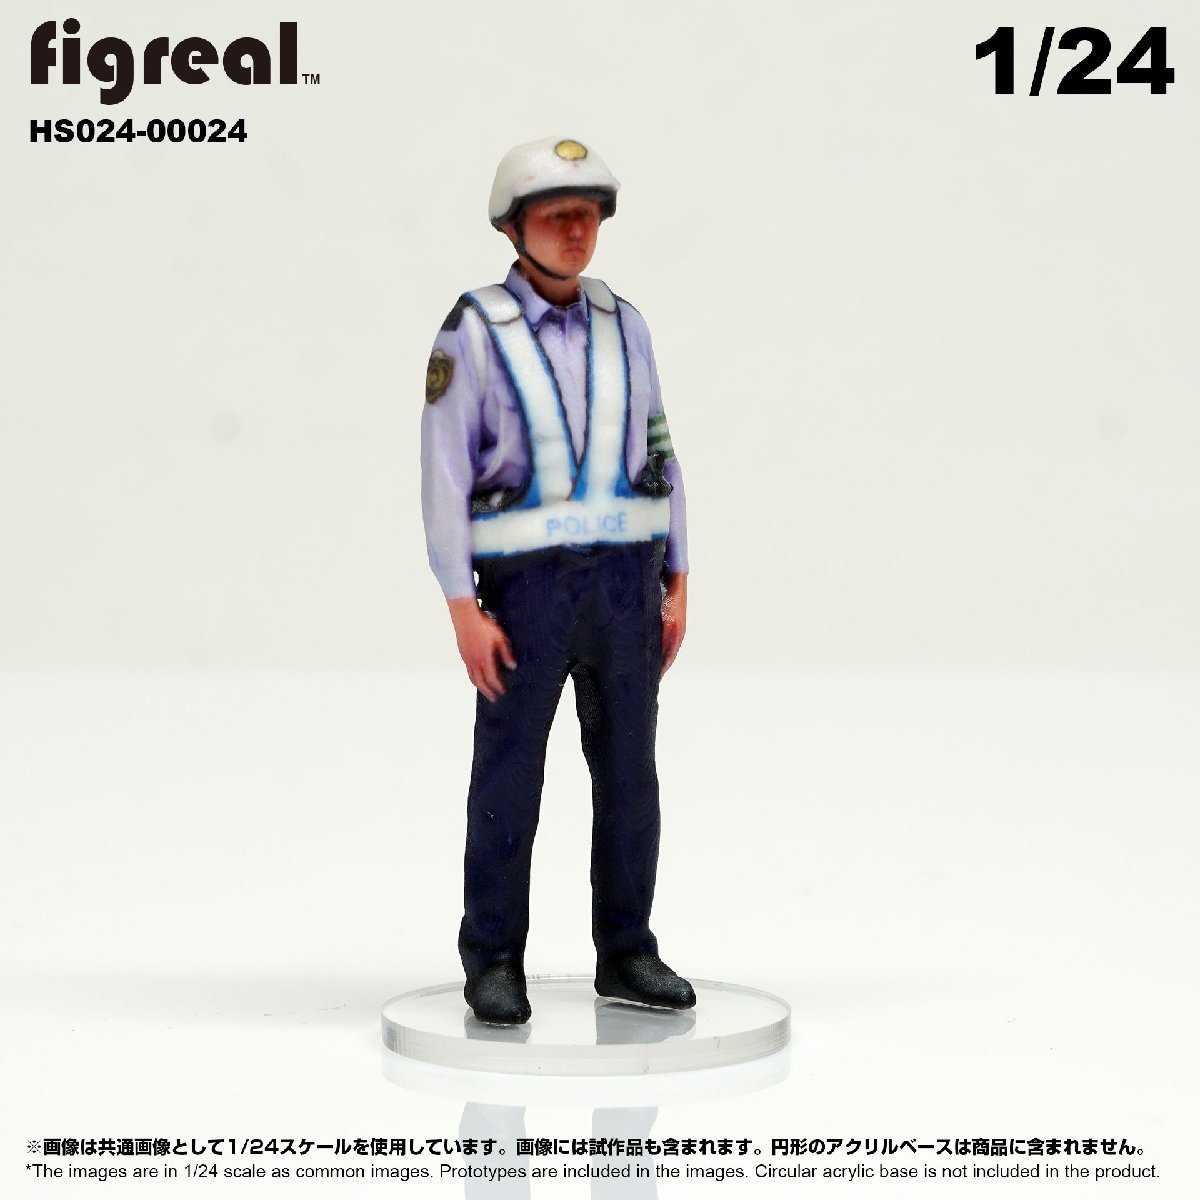 HS024-00024 figreal 日本交通警察官 1/24 高精細フィギュア_画像2